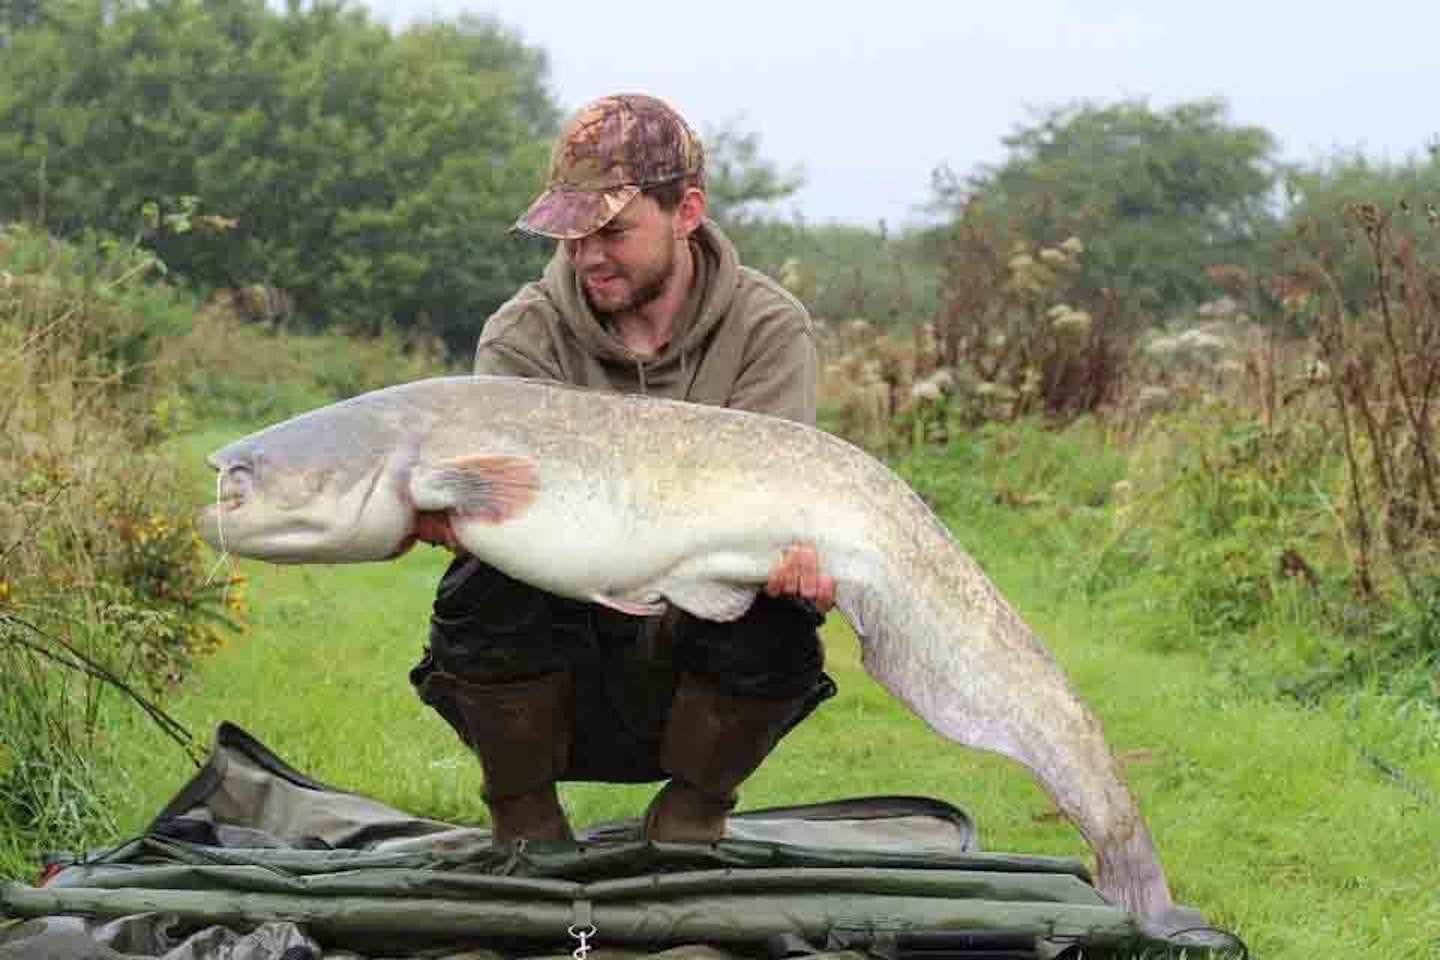 Fishing near me: Best lakes for catfish UK